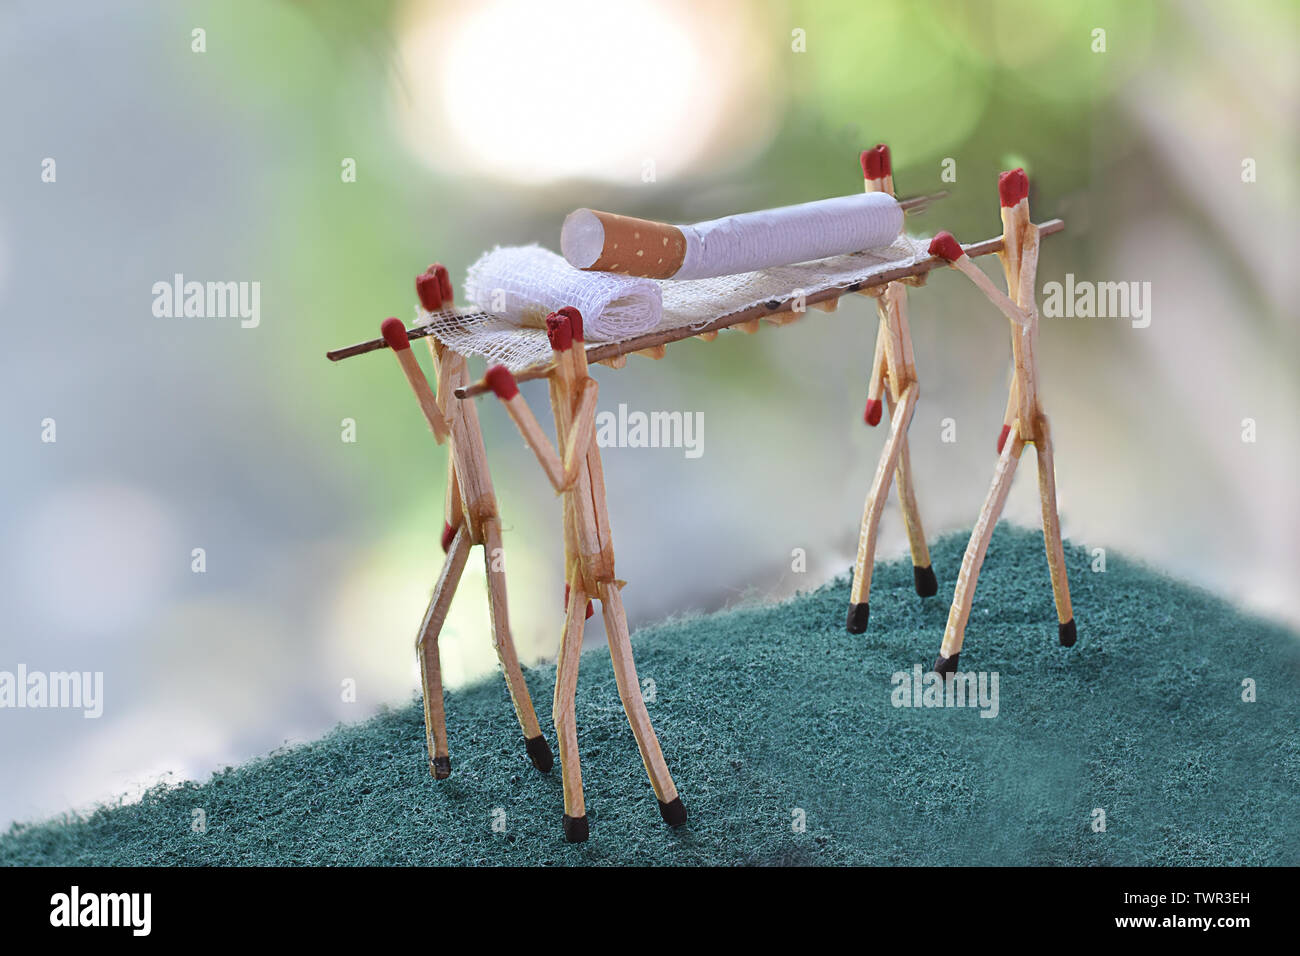 Creative Photography of Stop Smokingusing Matches Stick Stock Photo